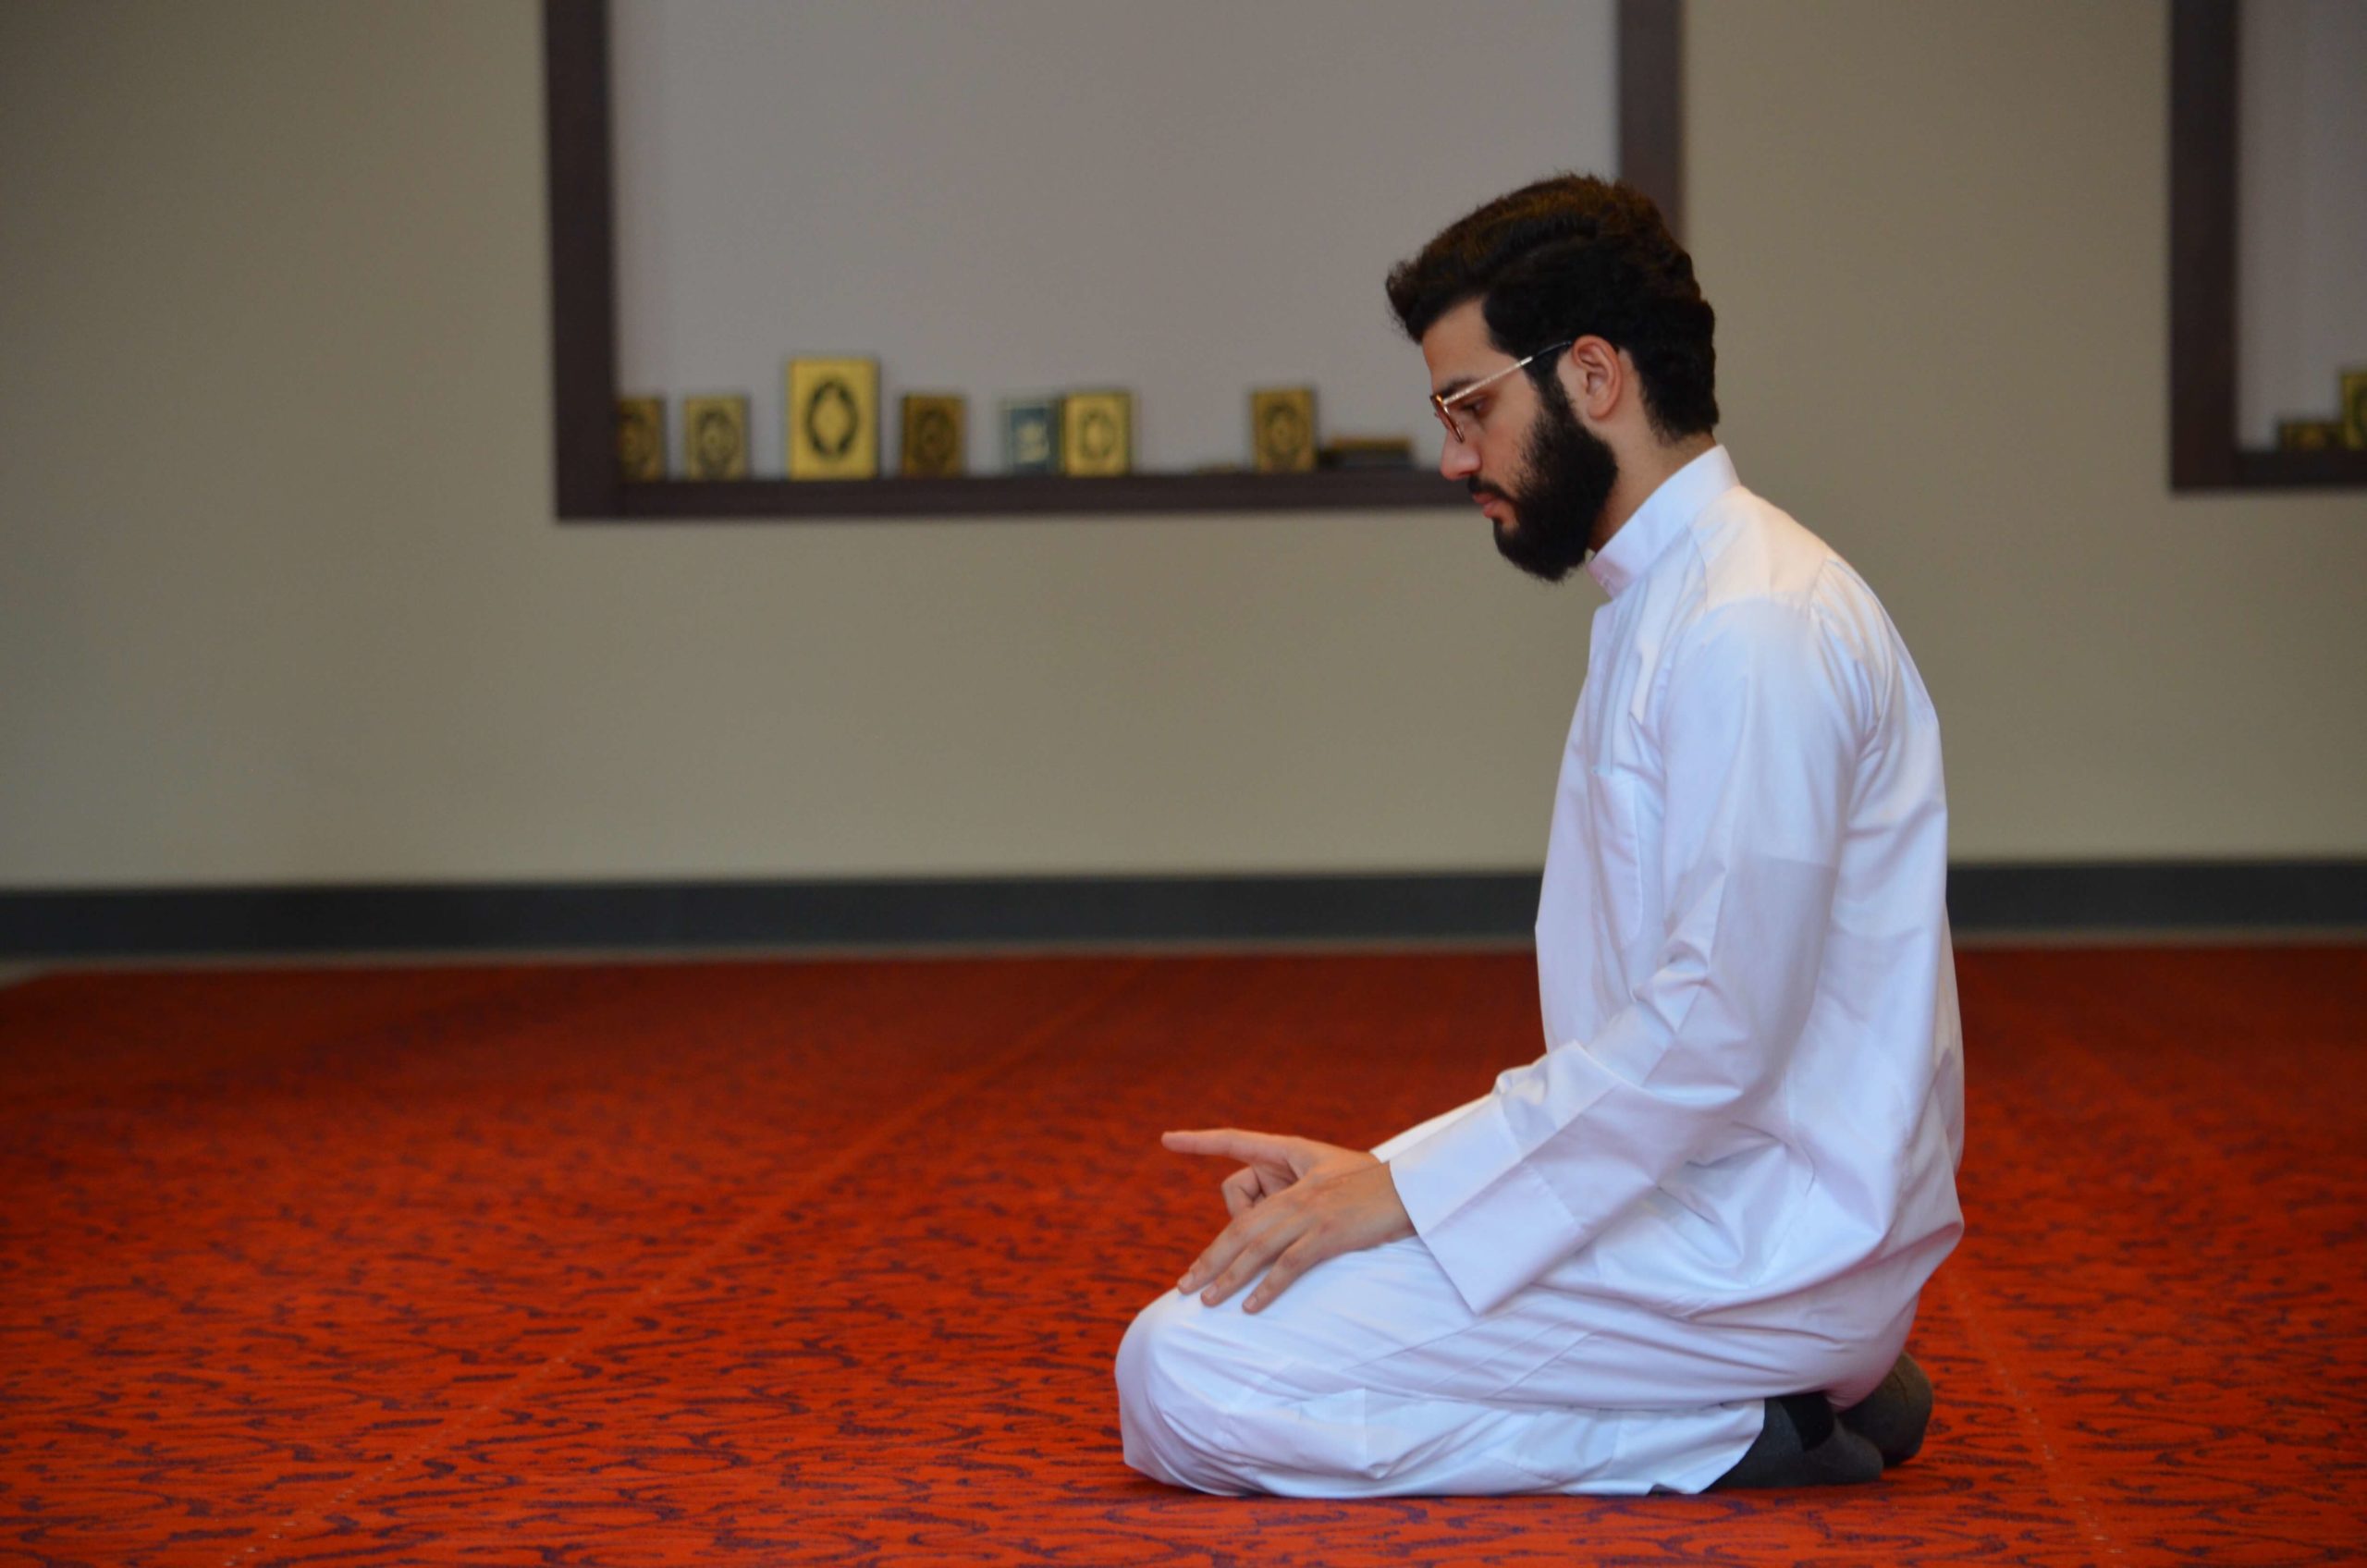 sitting position during salat prayer